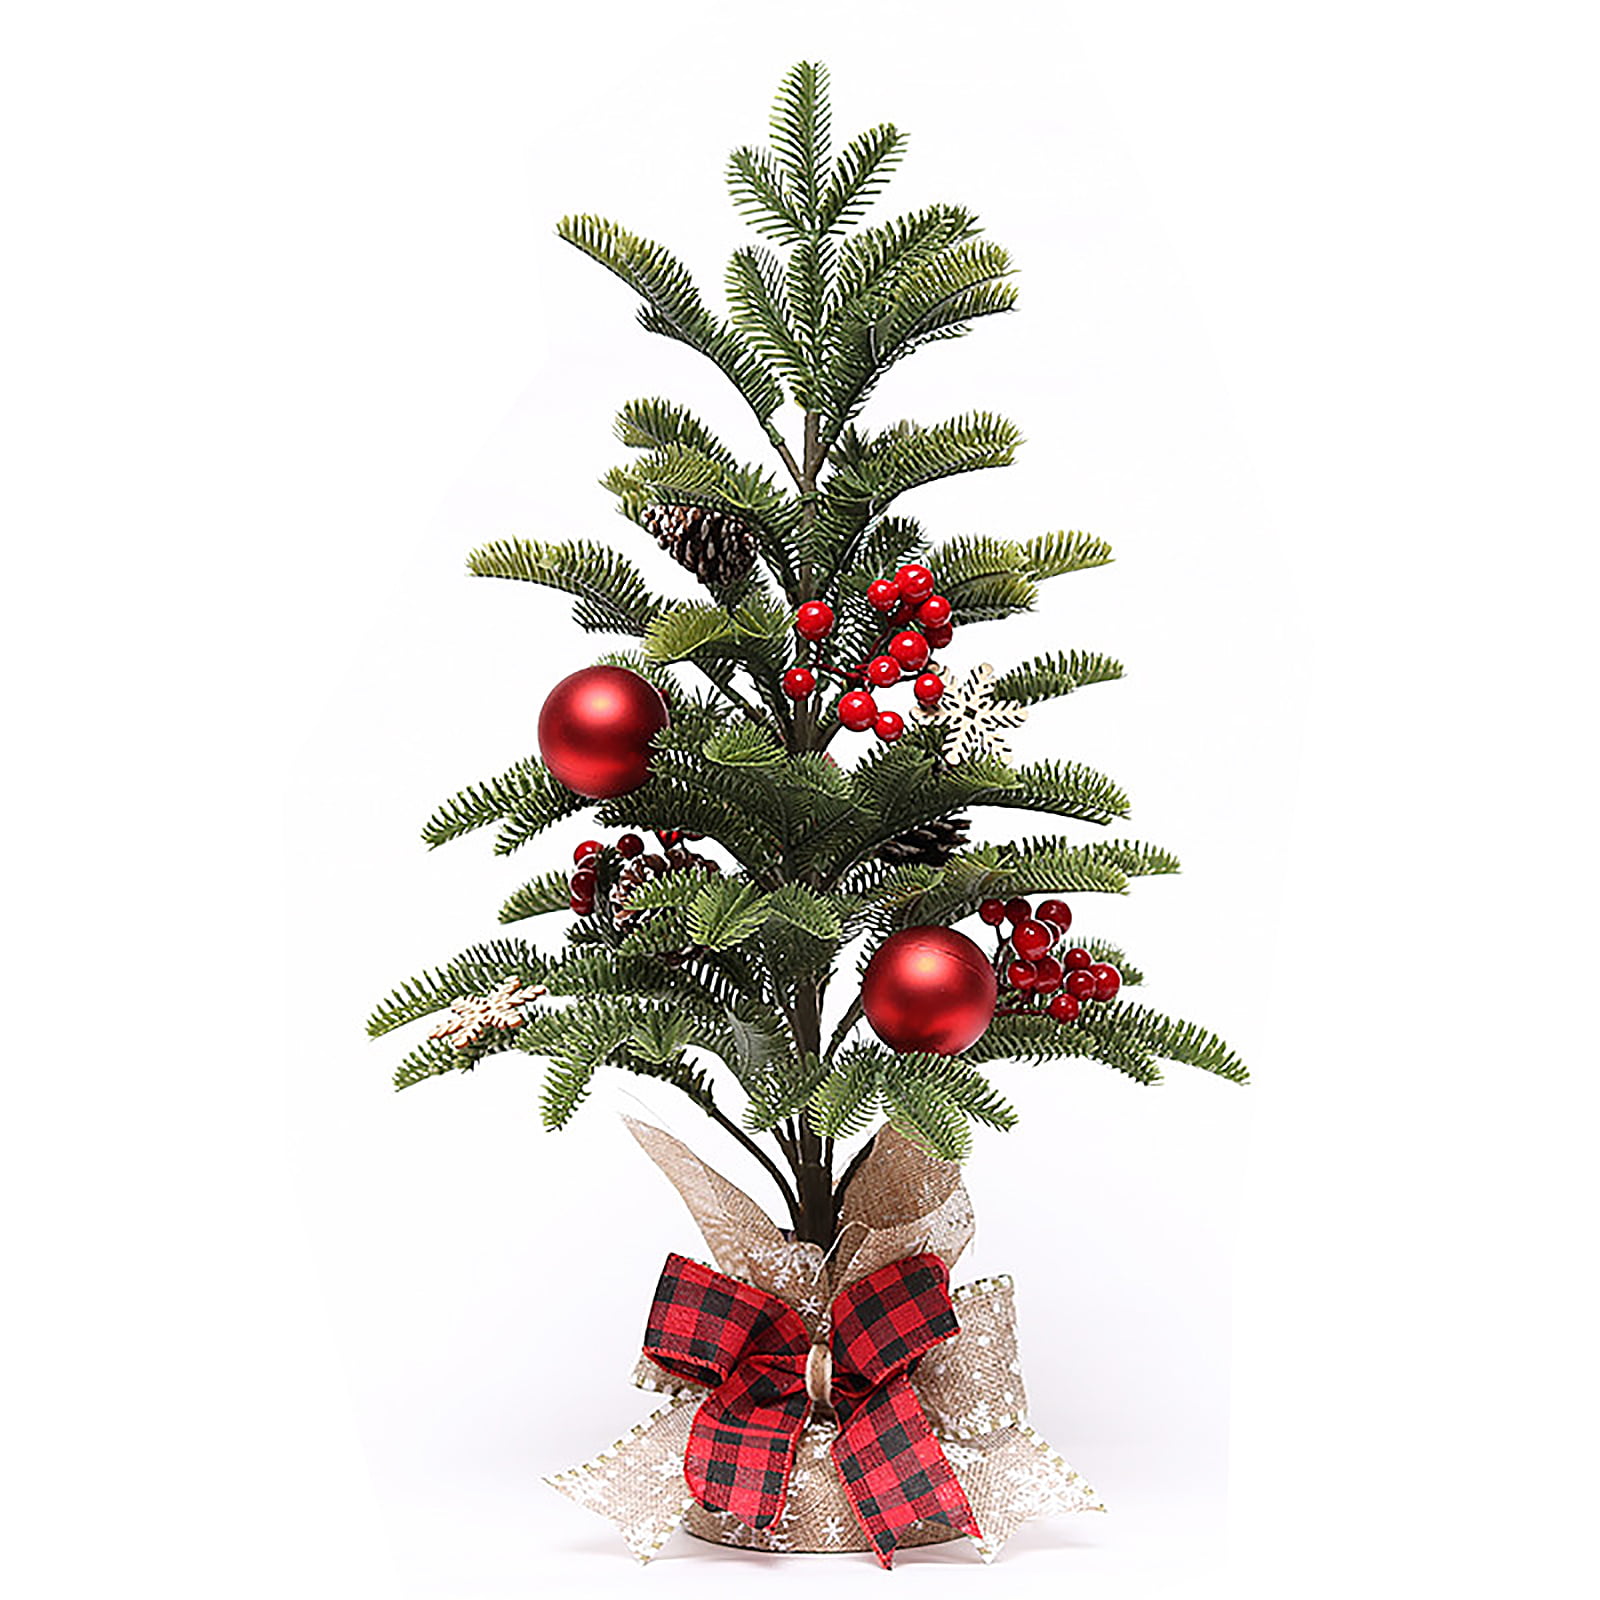 Details about   Mini Christmas Trees Pine Tree Desktop Home  Xmas Decorations Festival Ornaments 